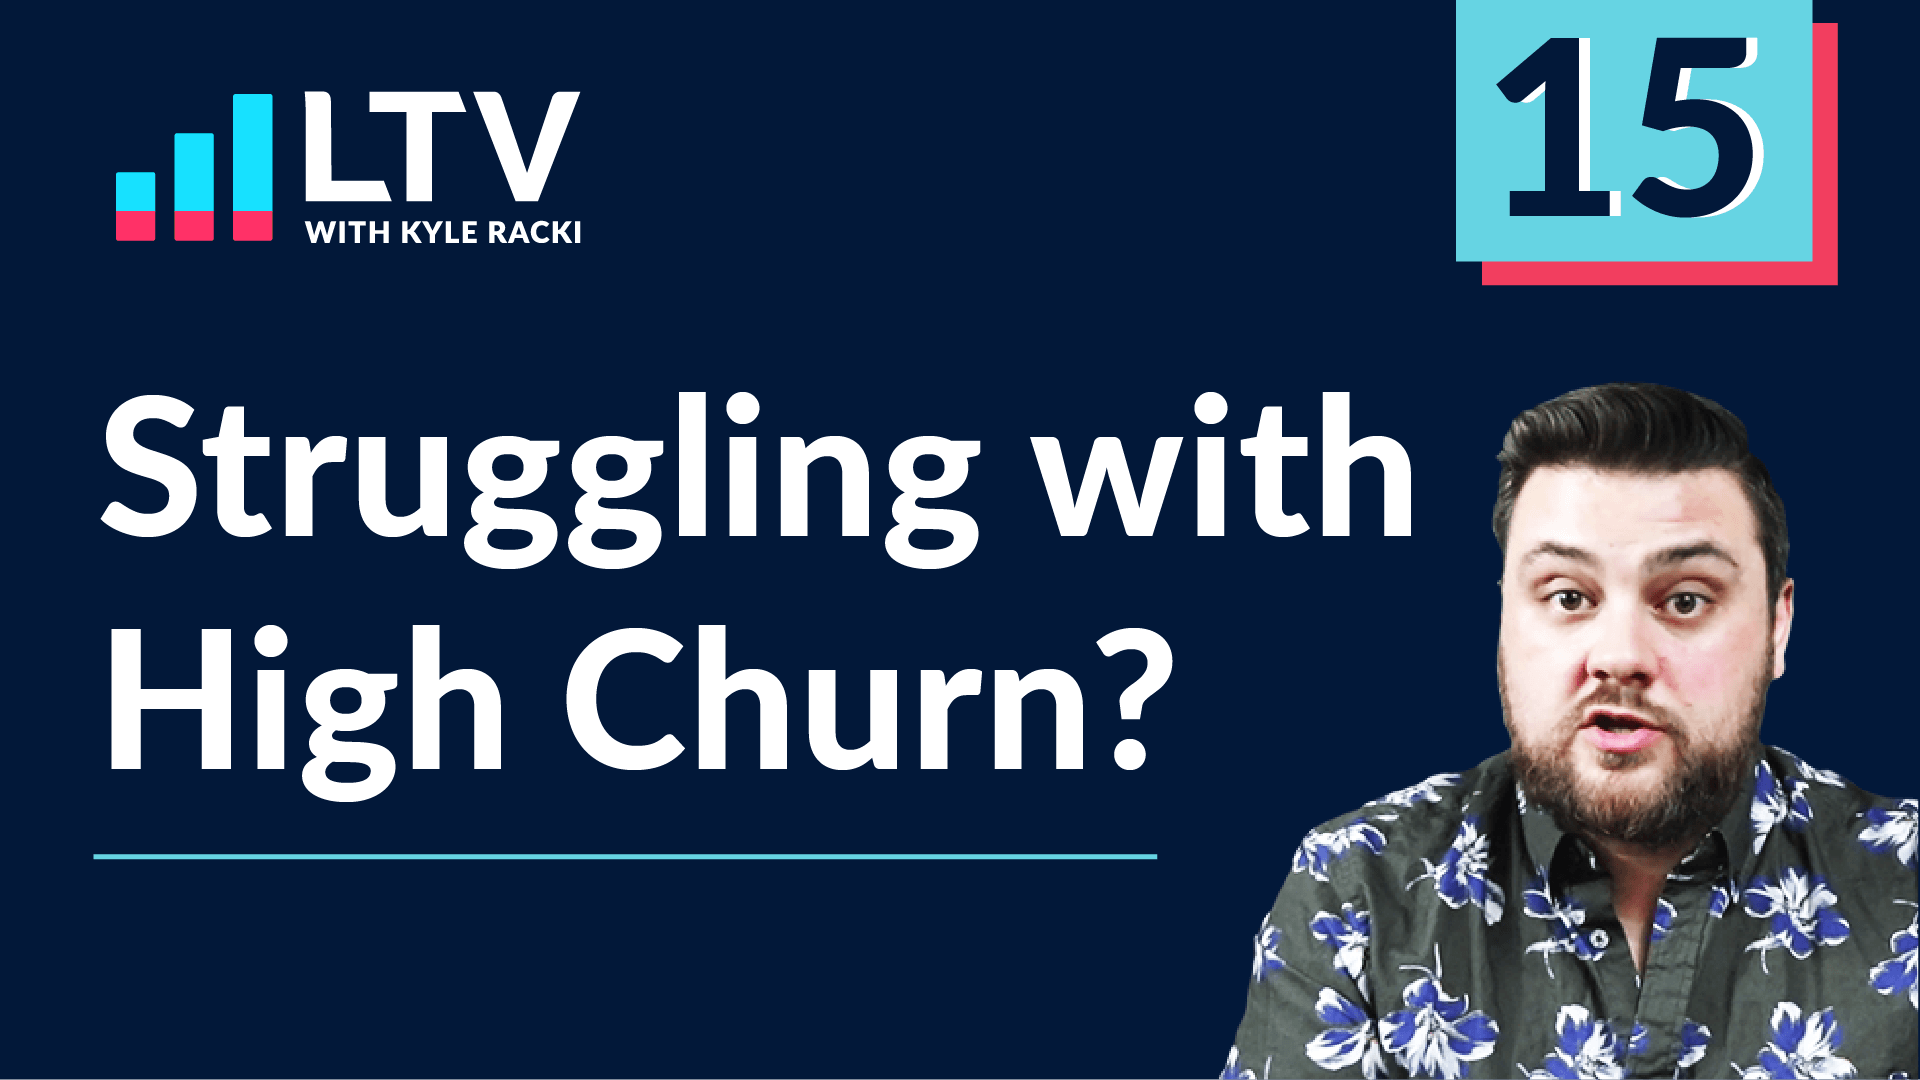 LTV Podcast Episode 15: Struggling with High Churn?